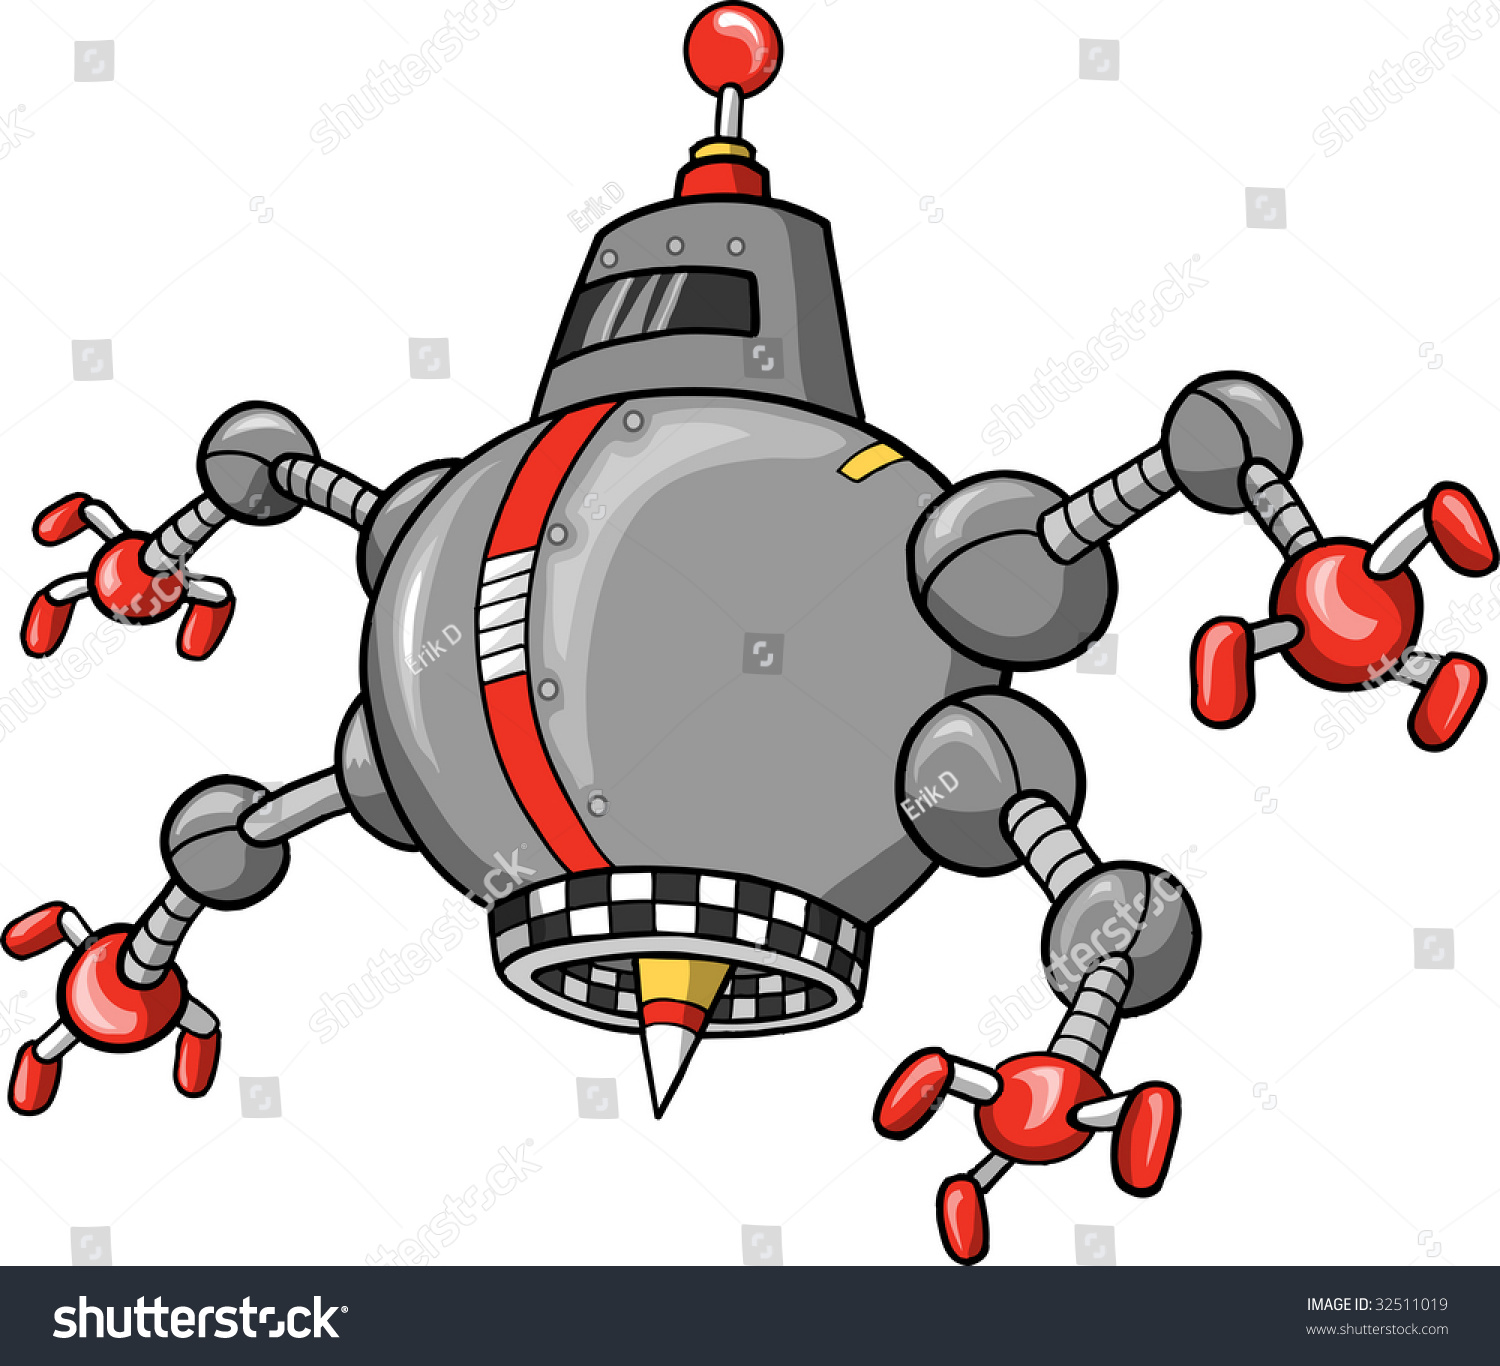 Robot Vector Illustration Stock Vector 32511019 - Shutterstock